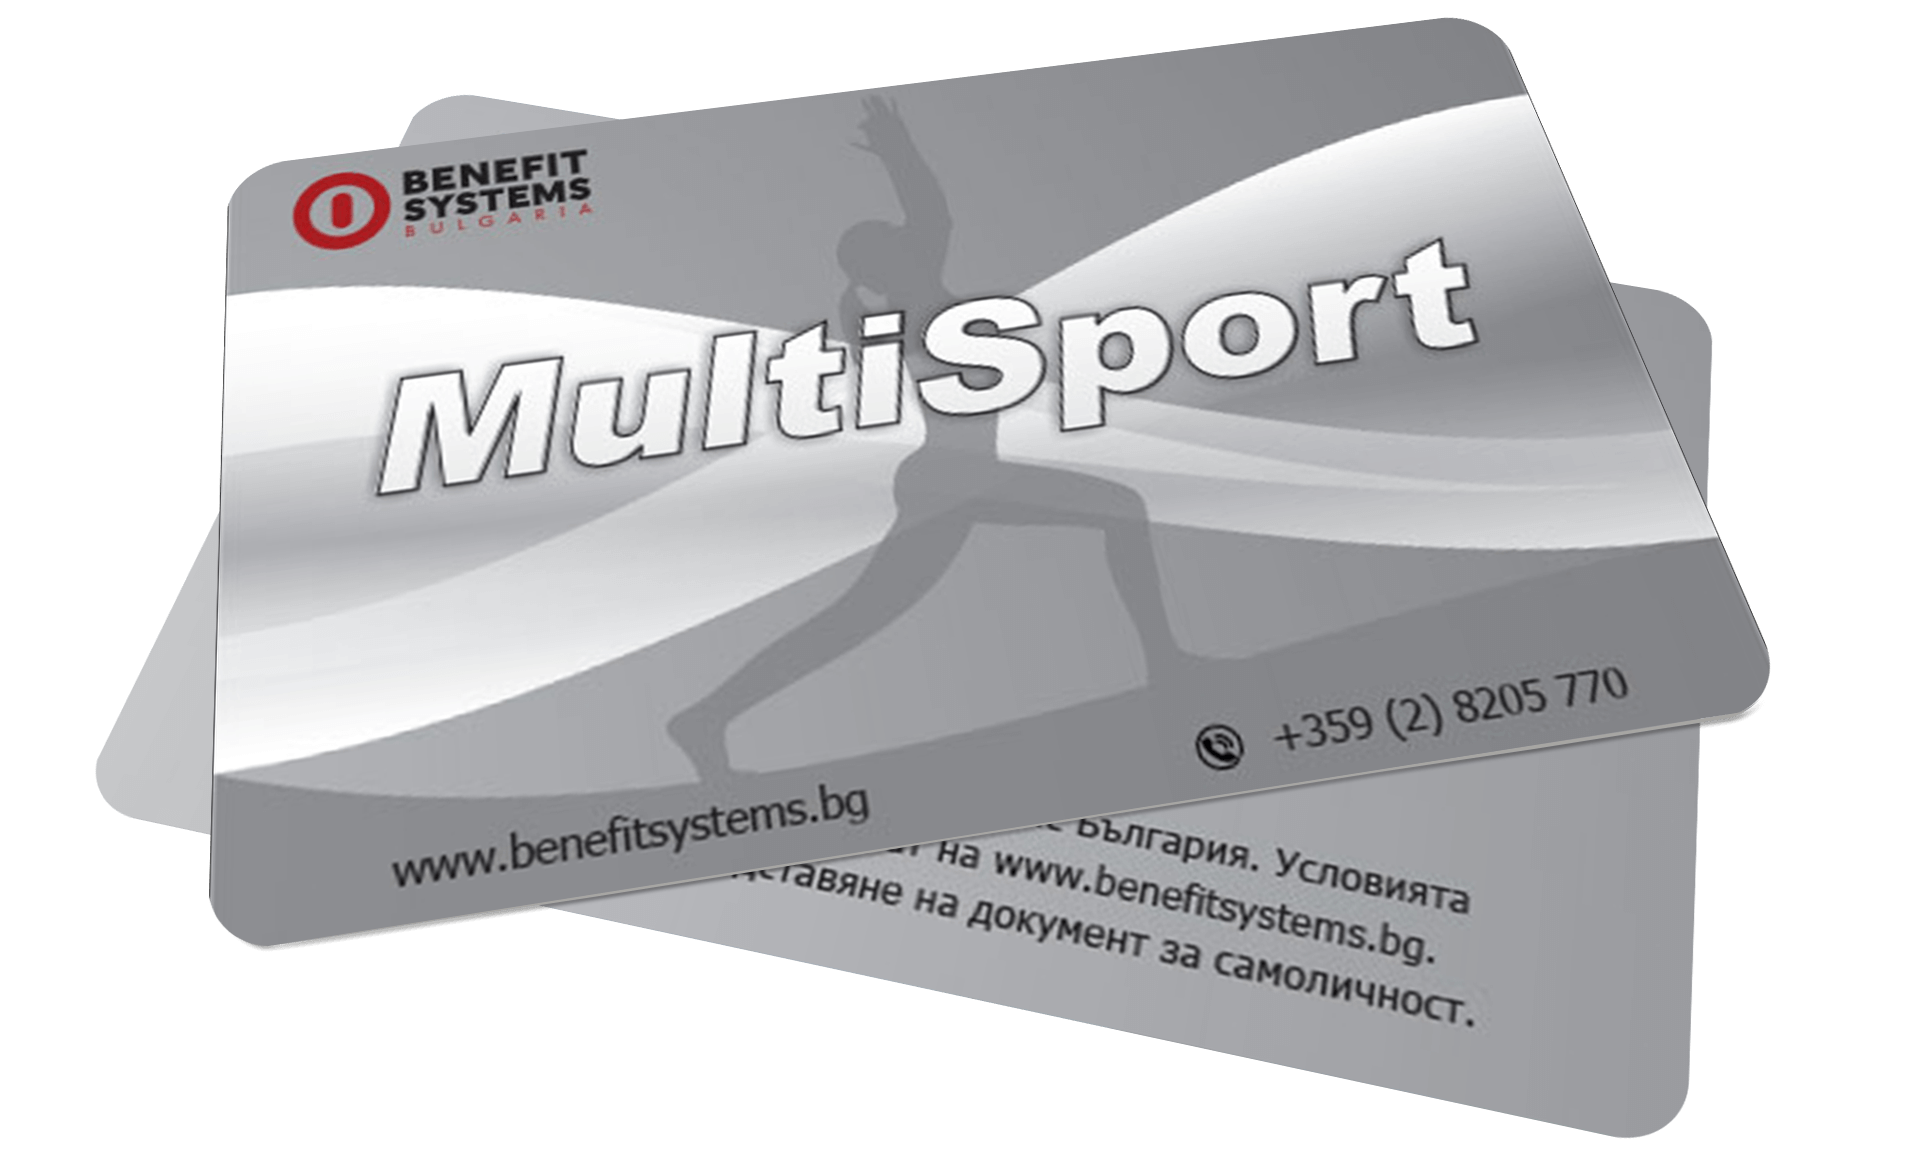 Multisport card